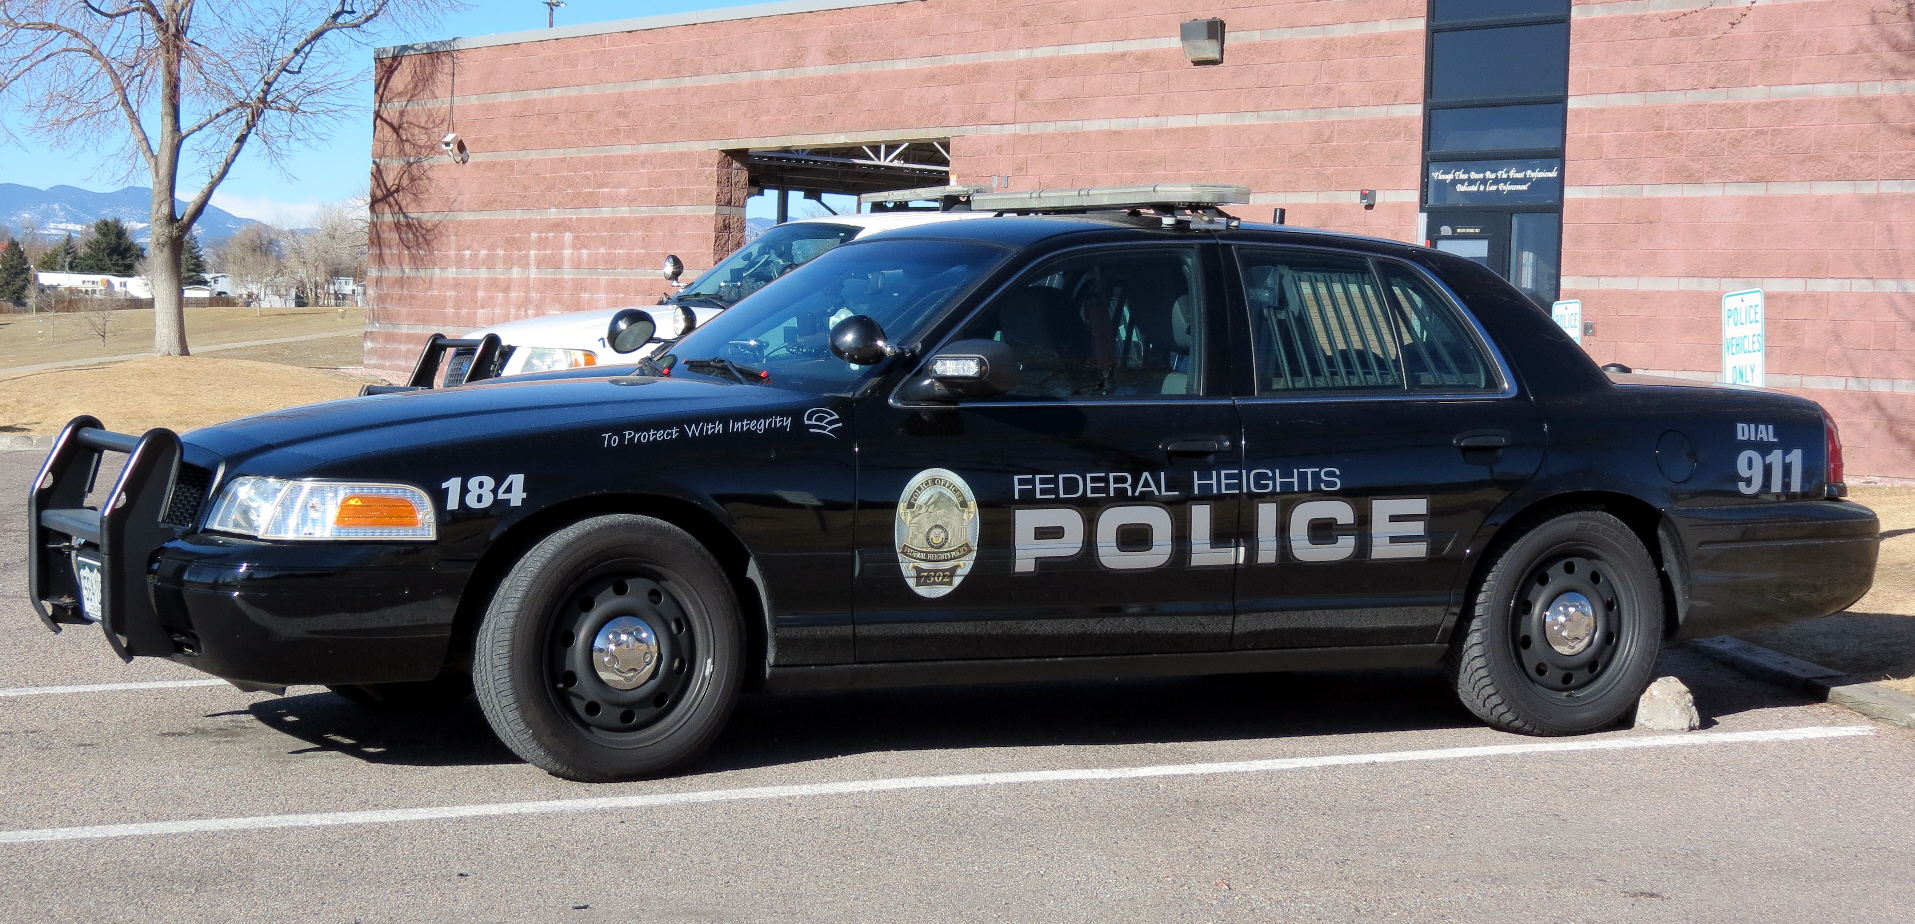 2010 Ford Police Interceptor.